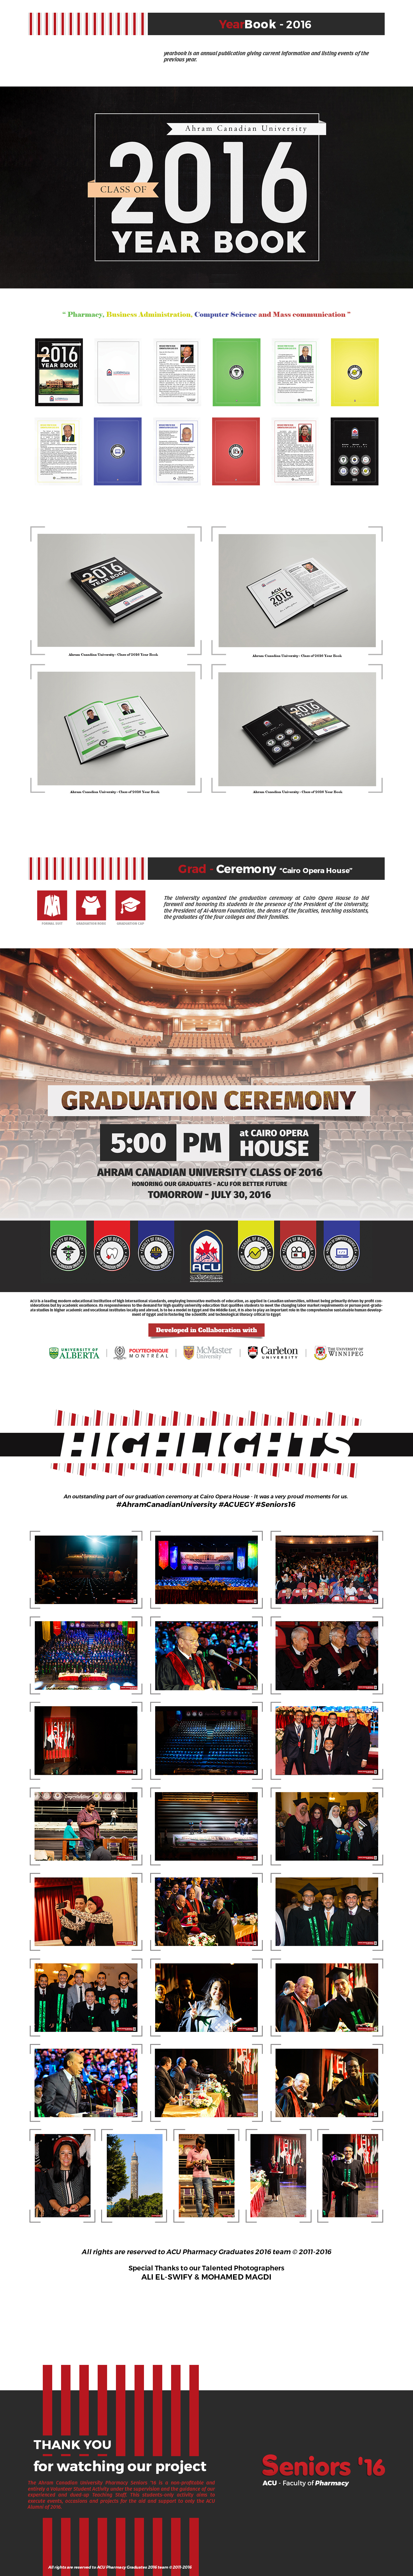 Canadian University pharmacy Graduates seniors logo graduation yearbook brand Fun